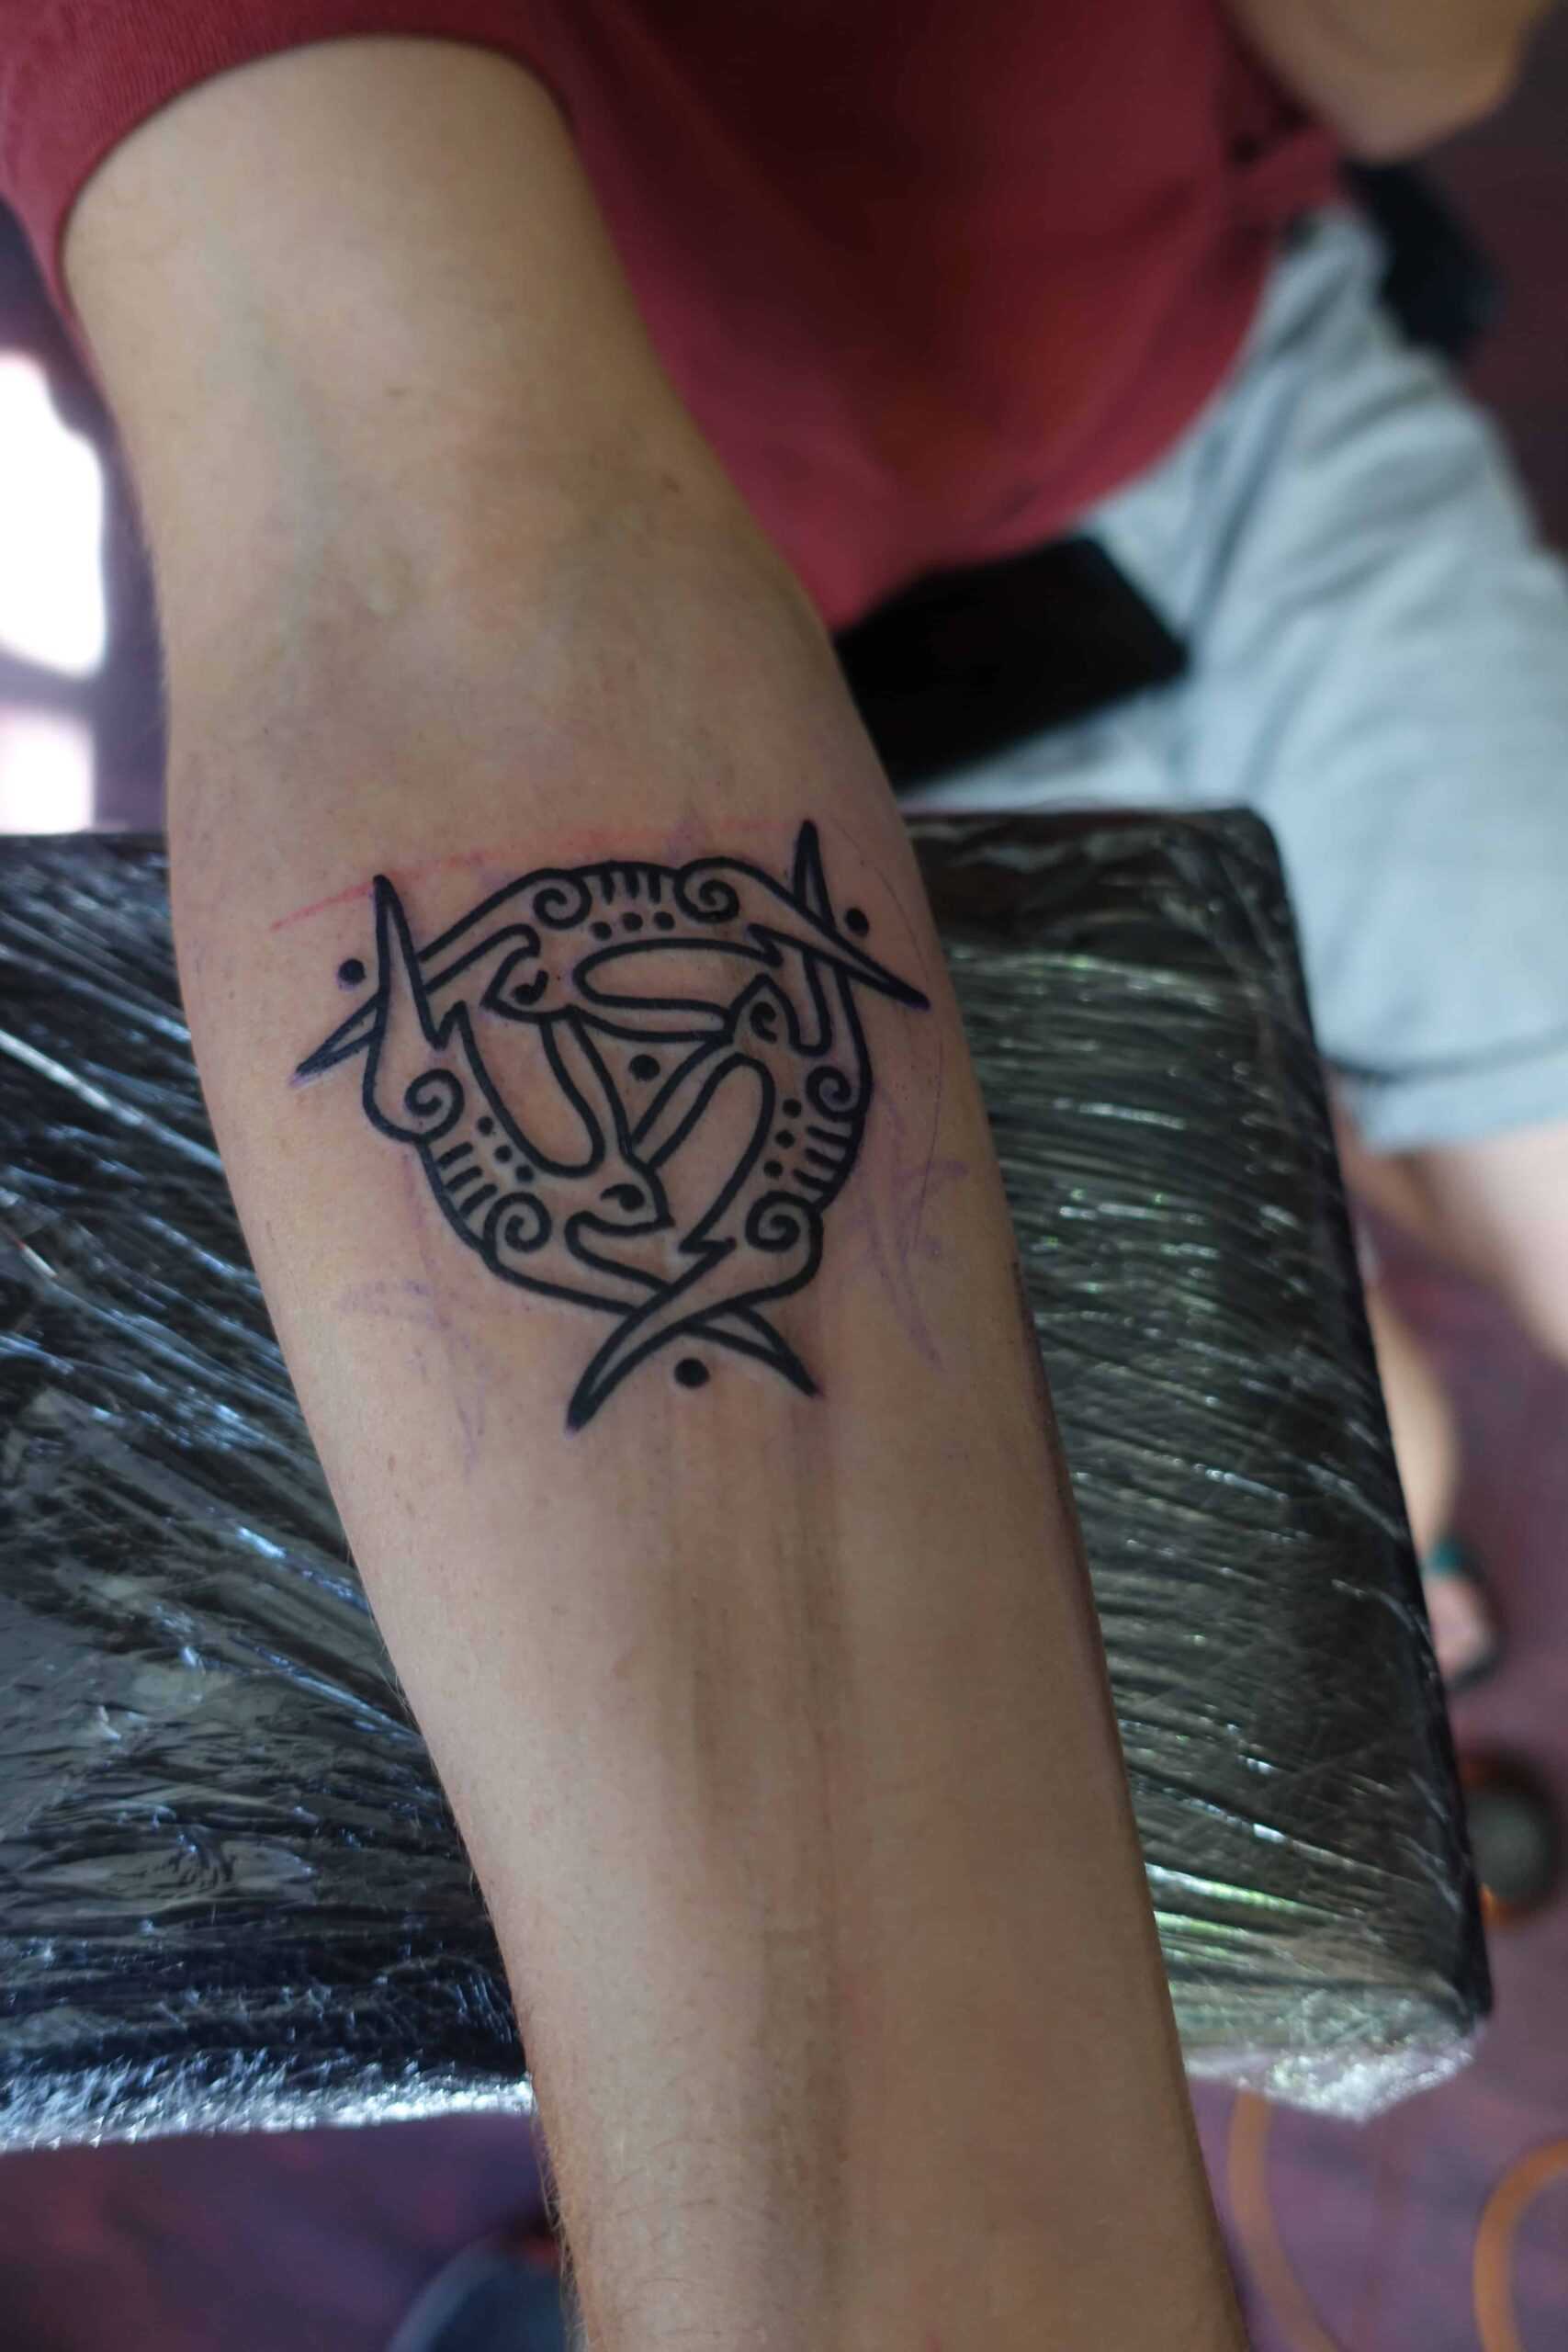 Pin by Whitney Fairchild on Tattoo ideas | Claddagh tattoo, Tattoos, Irish  claddagh tattoo